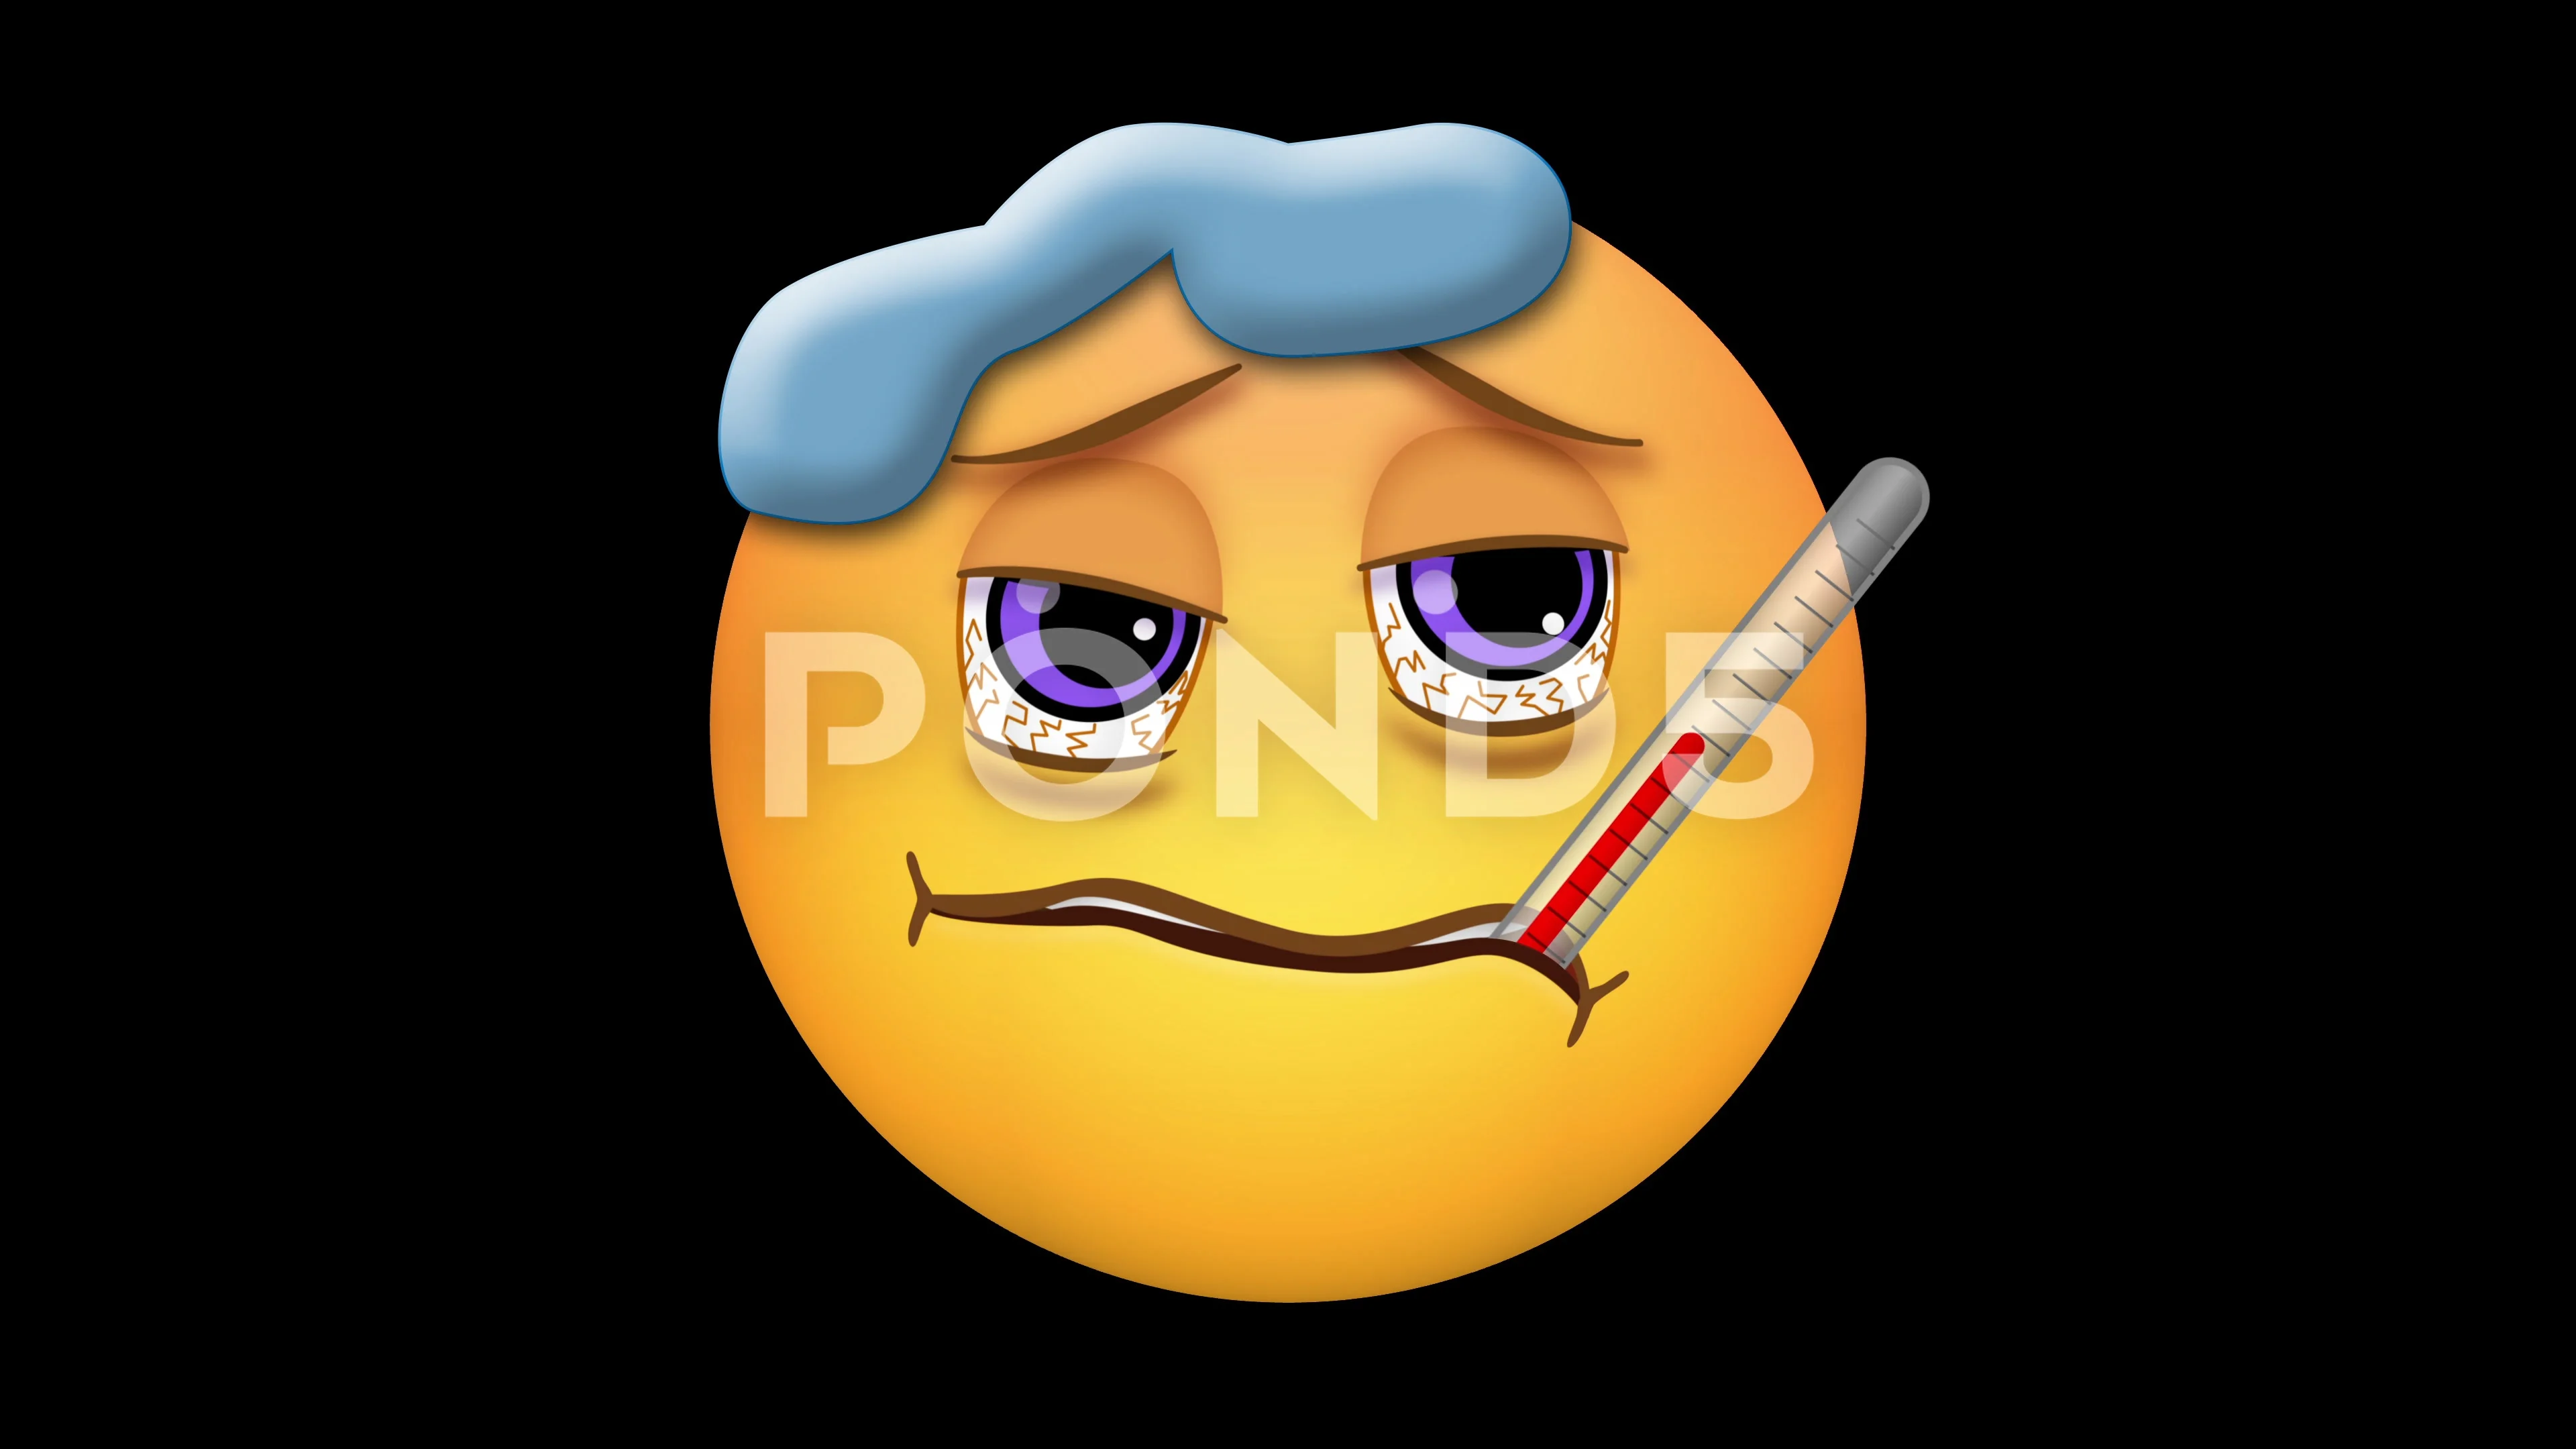 Scared Emoji with Luma Matte, Stock image